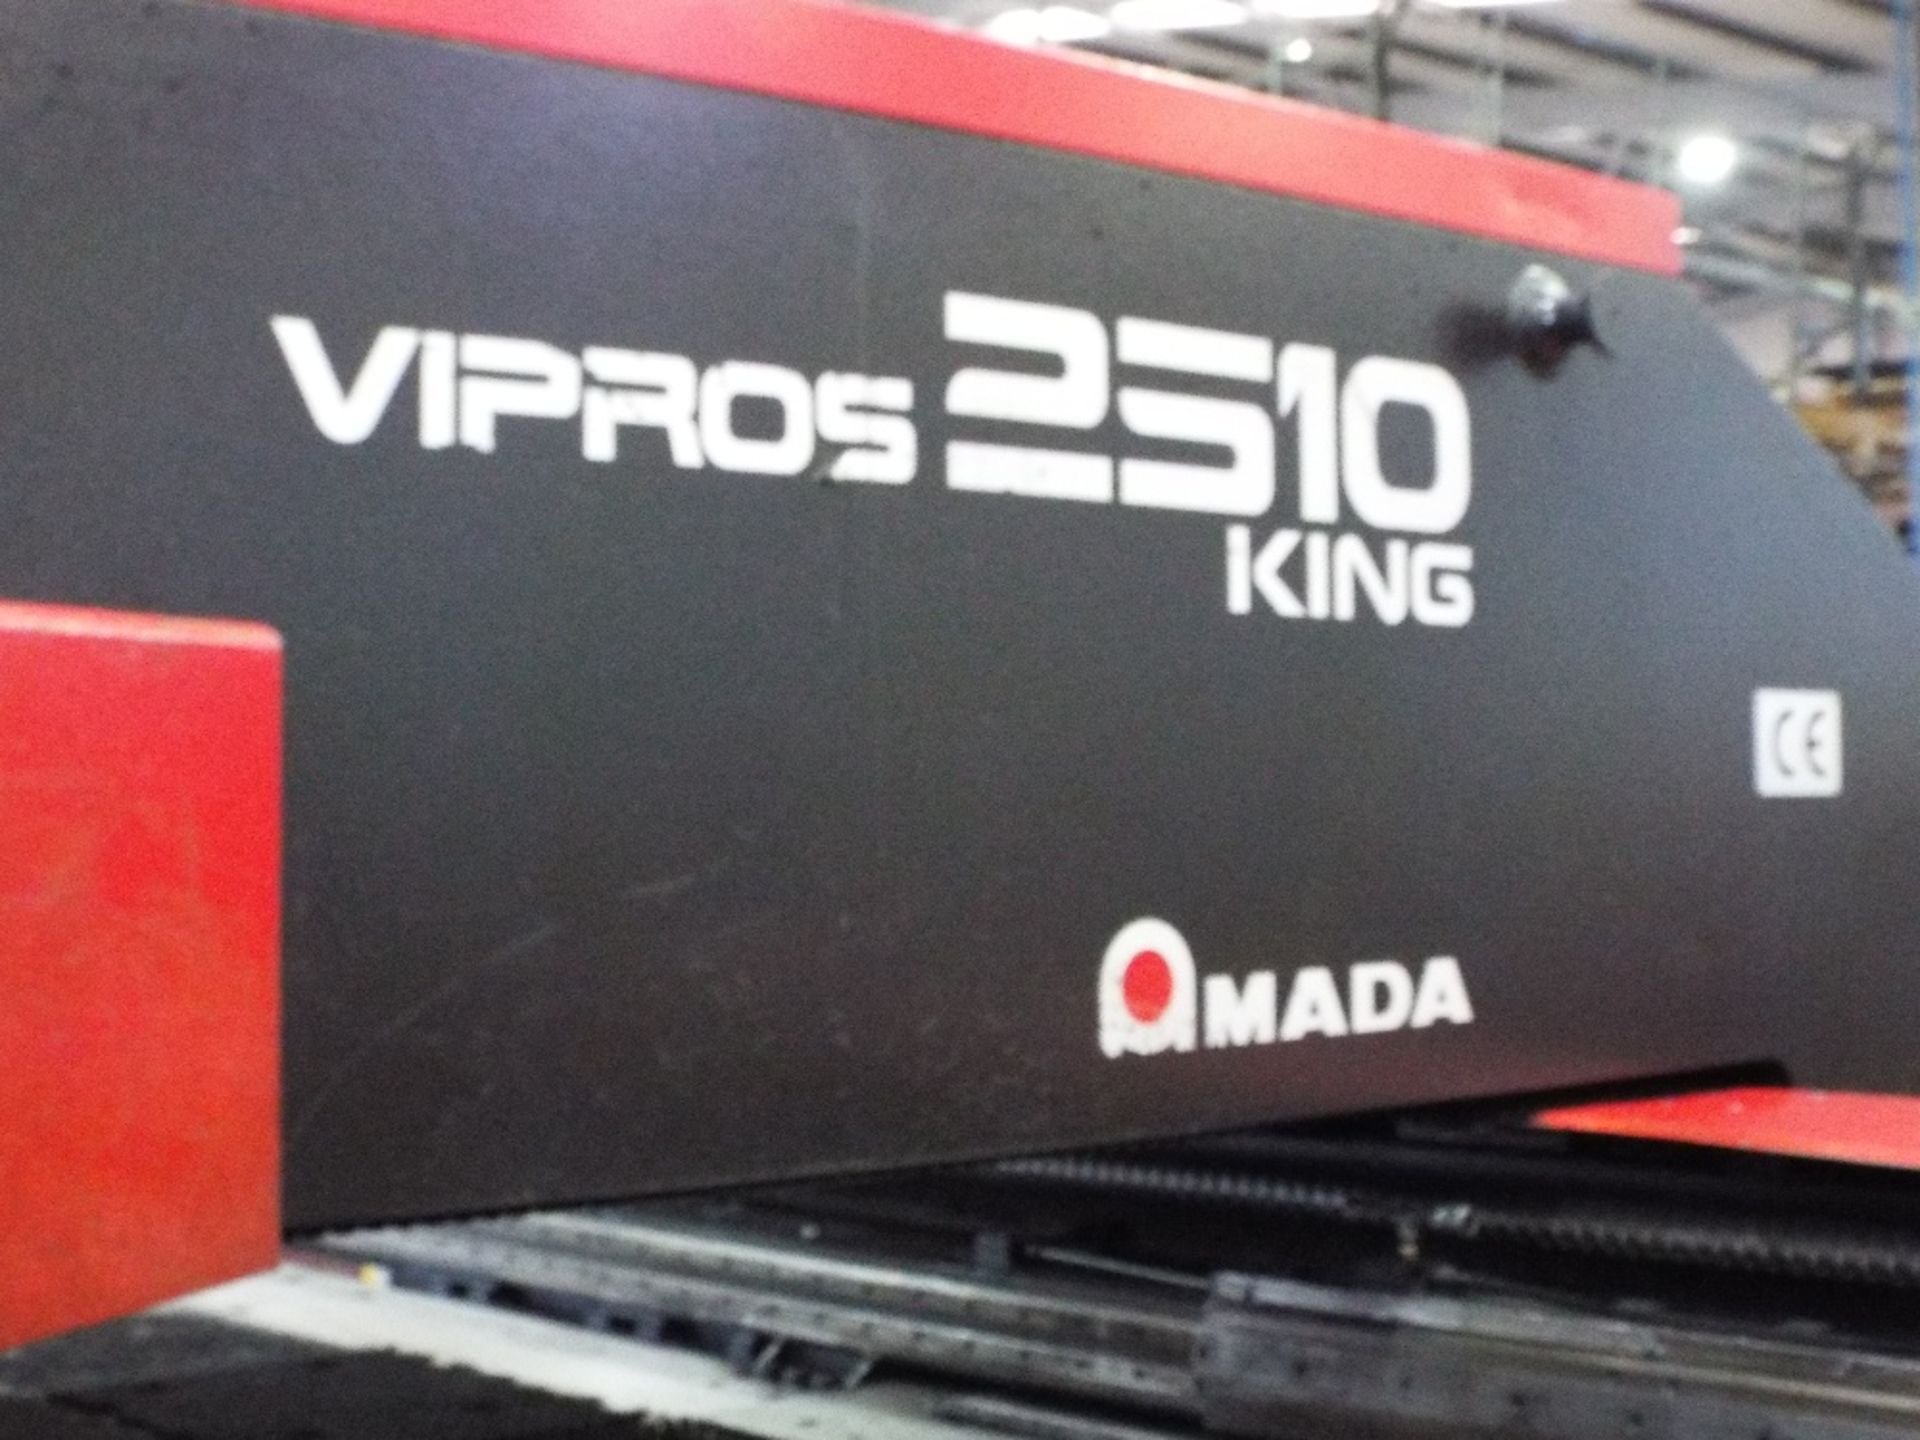 Amada Vipros 2510 King Turret Punch Press - Image 41 of 44